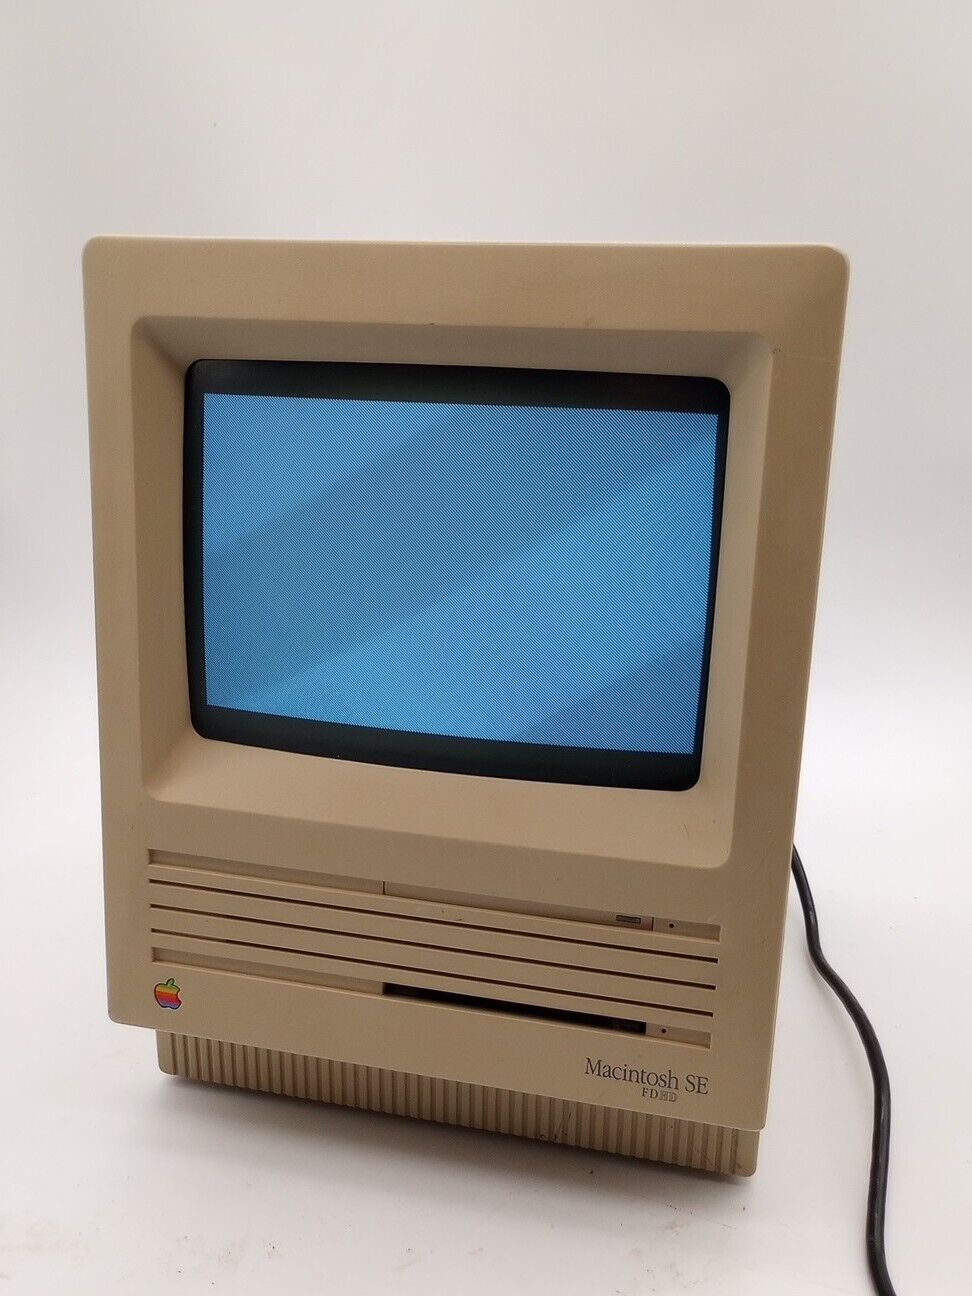 Macintosh SE fdhd 1988 Mod M5011 POWERS ON BLANK SCREEN VINTAGE PARTS REPAIR 